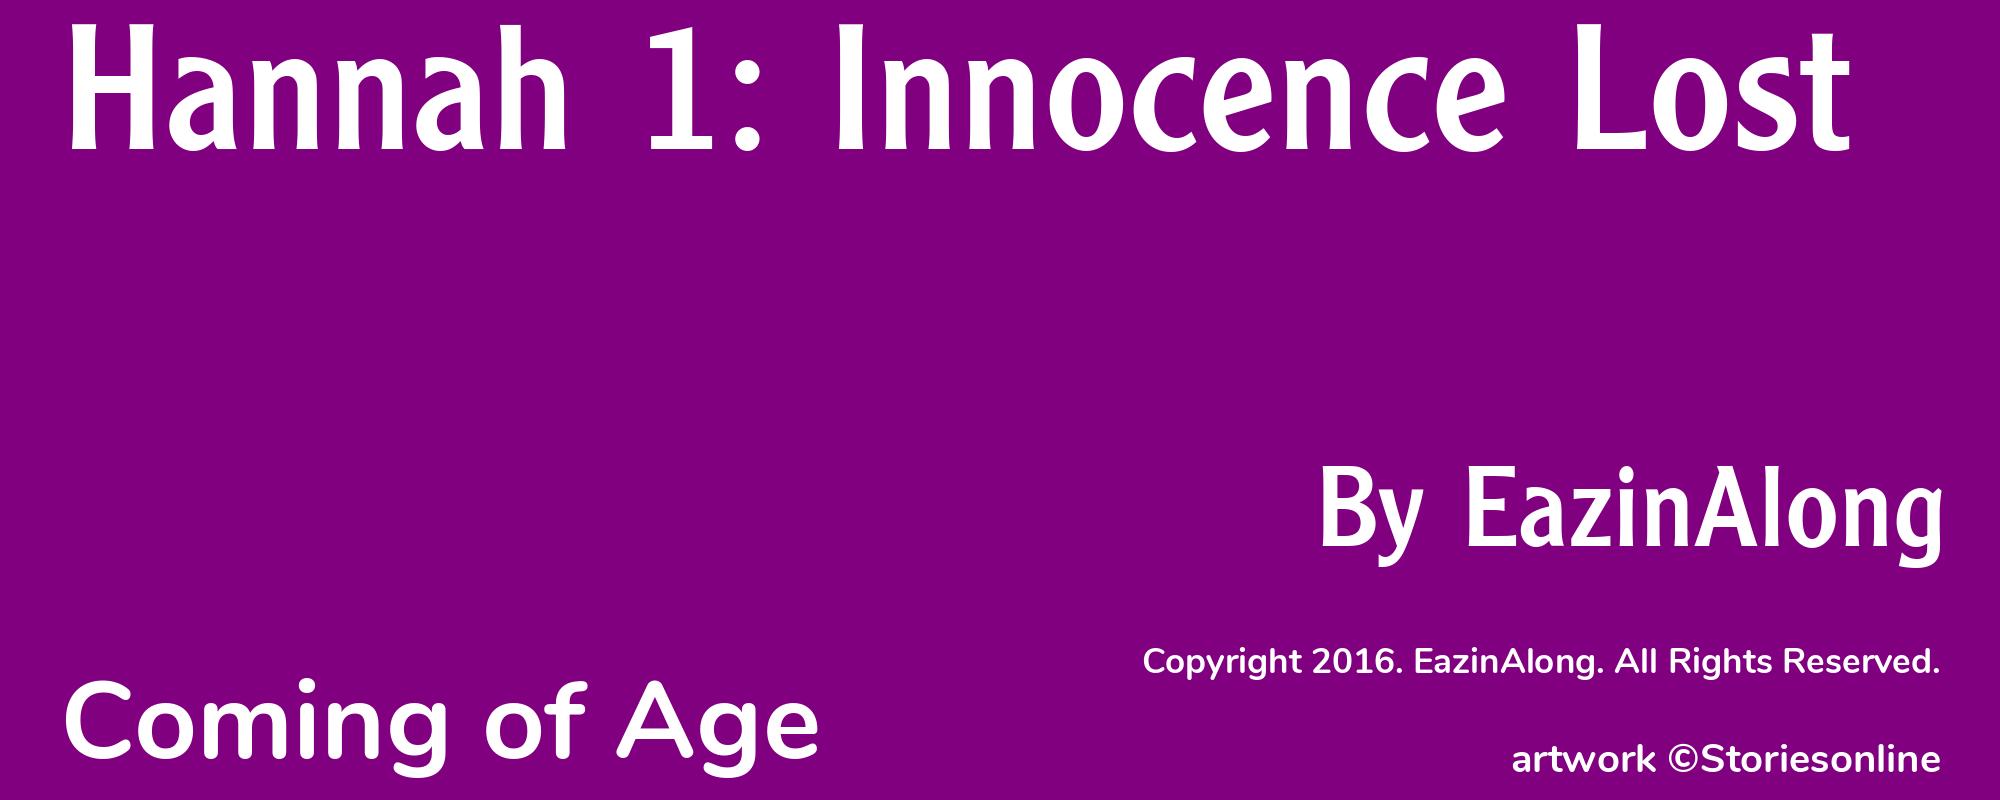 Hannah 1: Innocence Lost - Cover